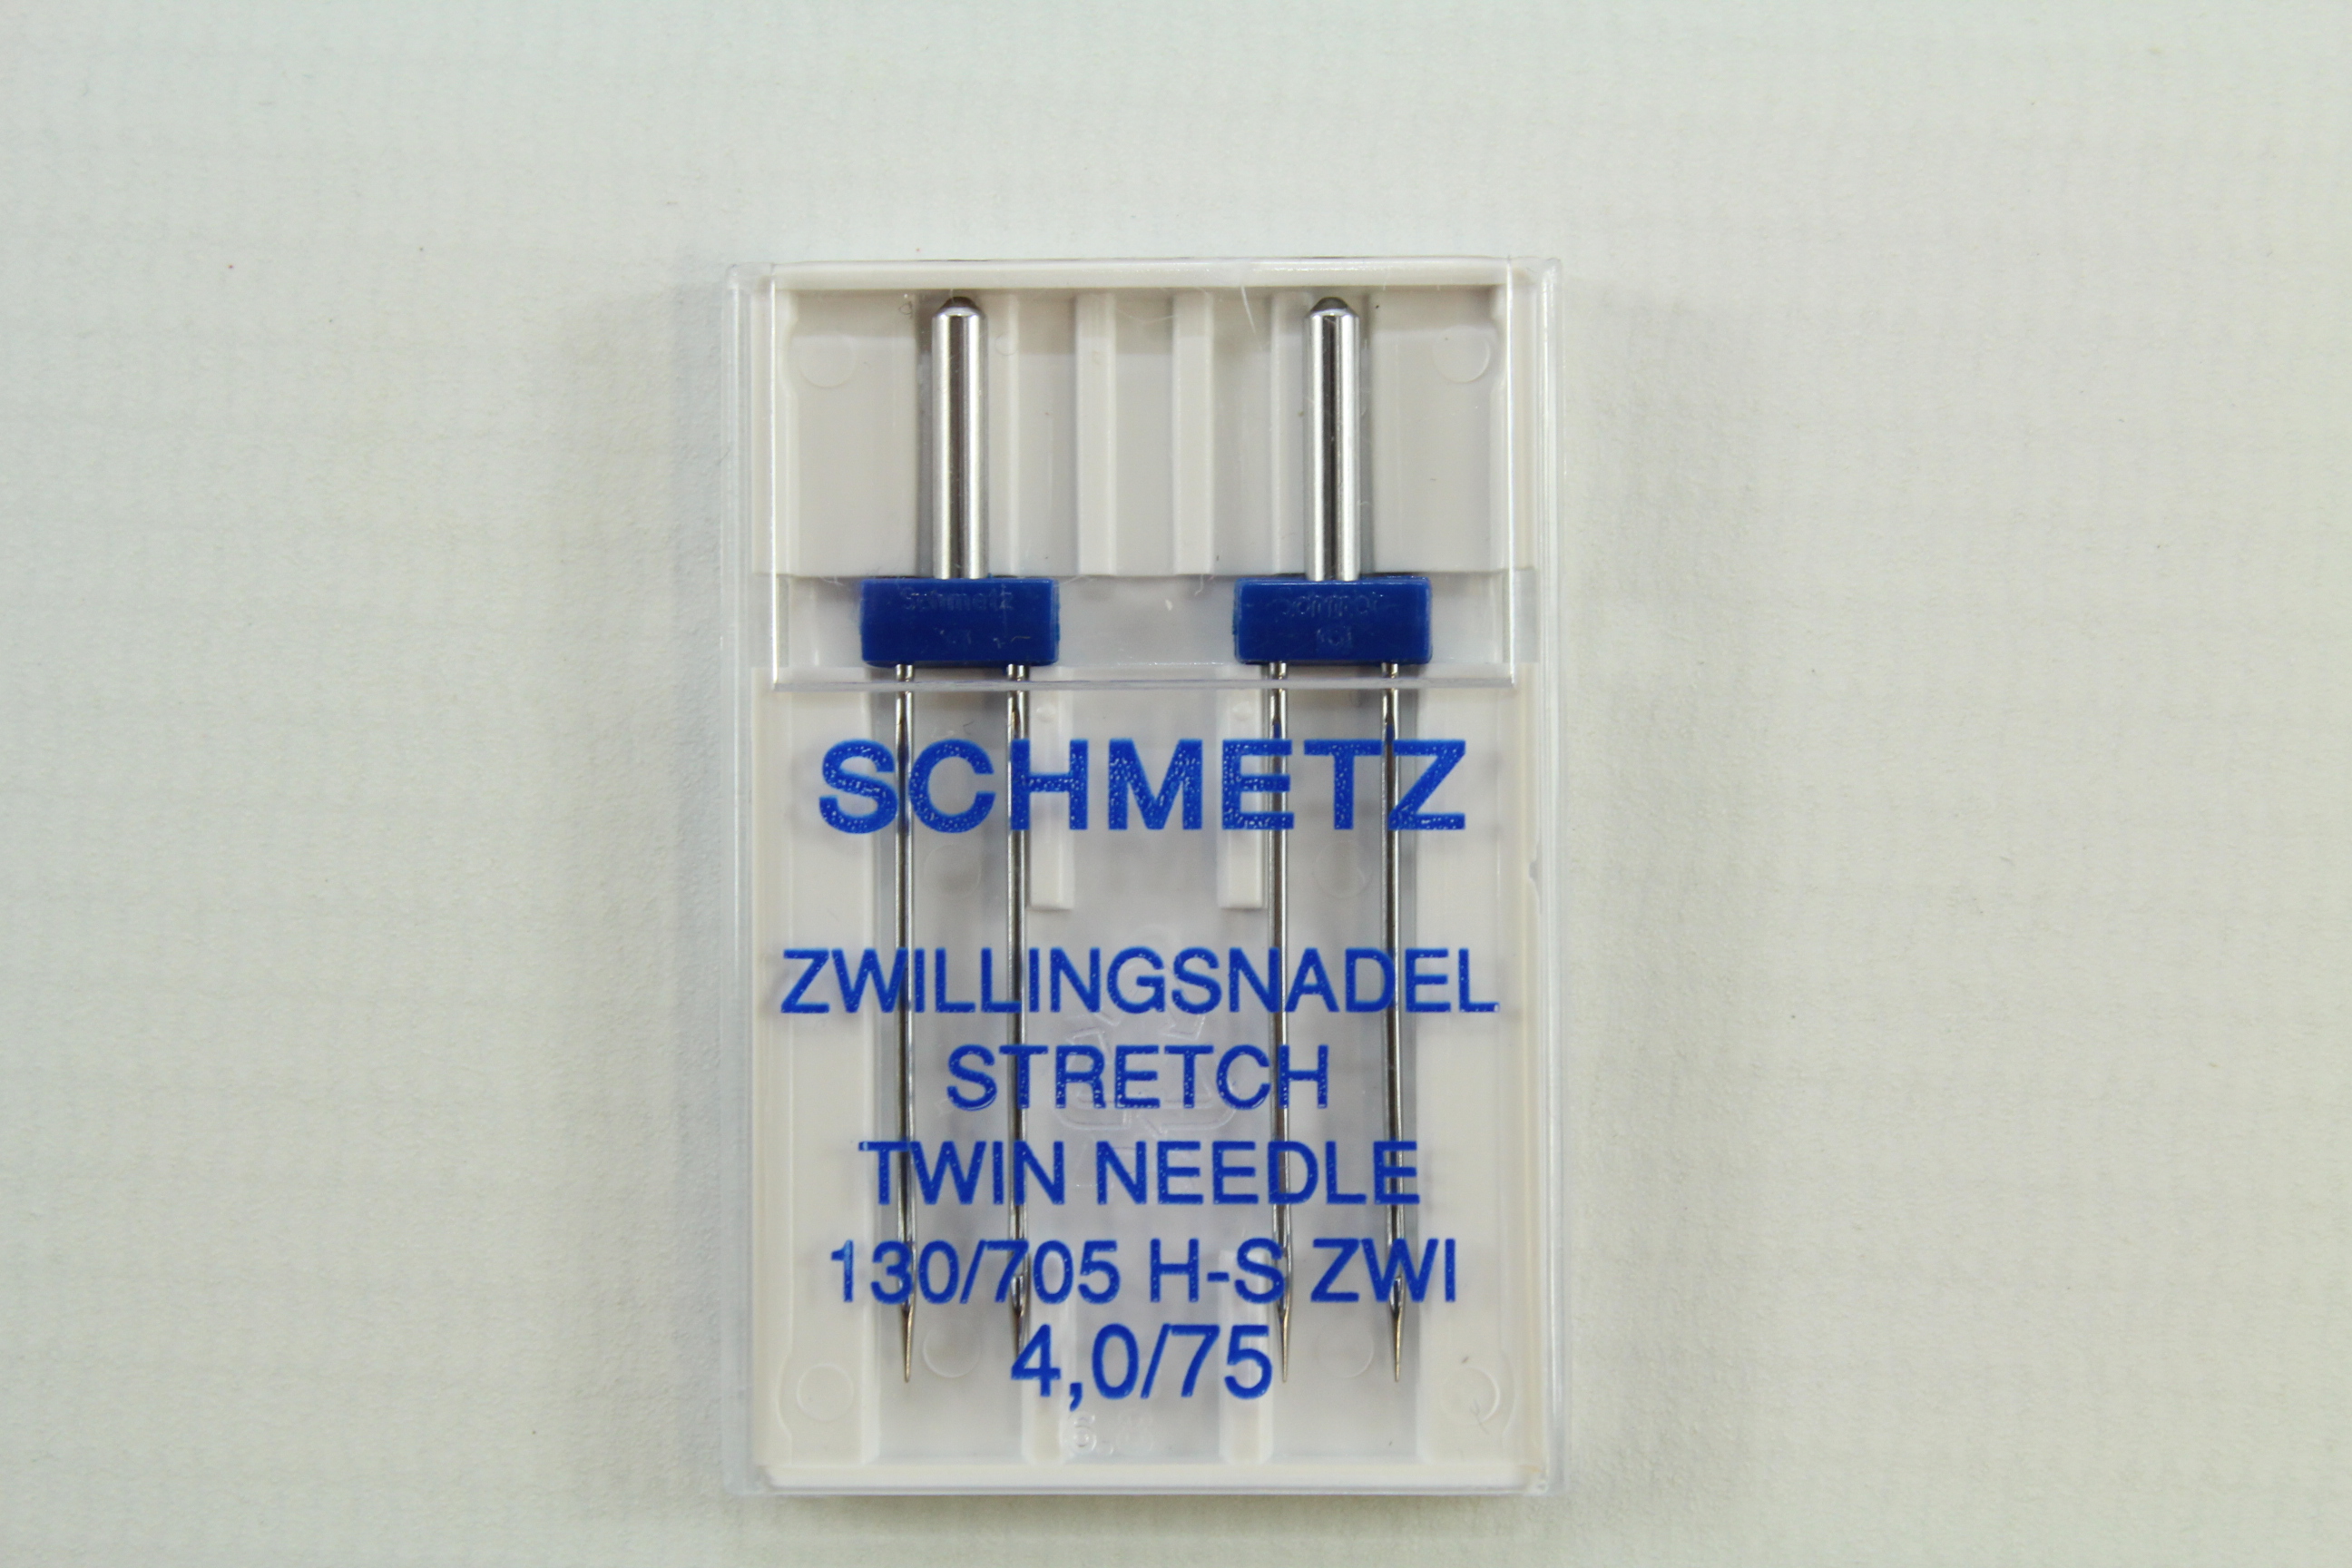 Schmetz Zwillingsnadel Stretch 130/705 H-S ZWI 4,0/75 (2 Nadeln)